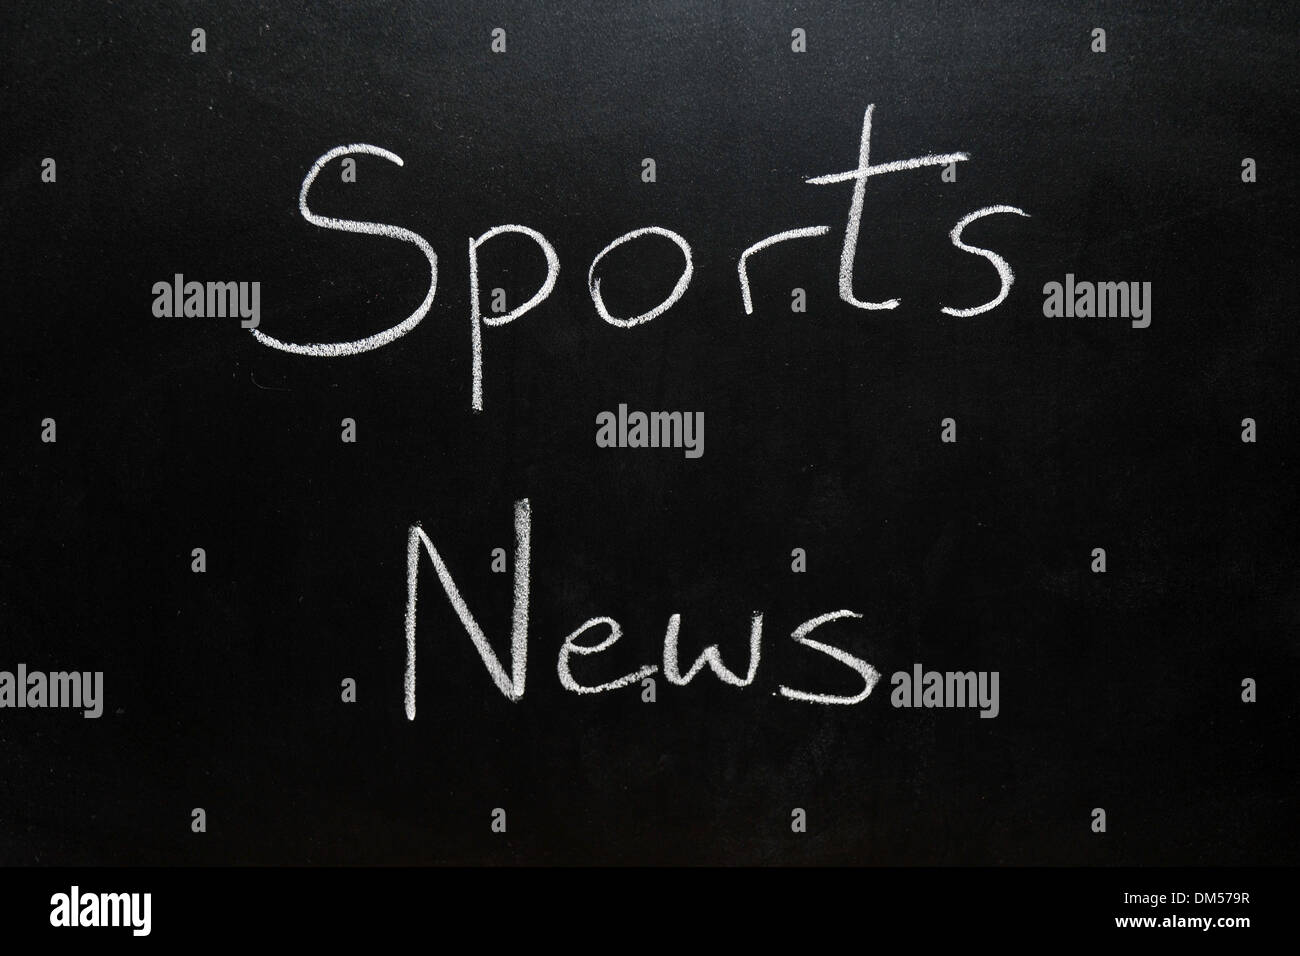 Sports News drawn on a blackboard in chalk. Stock Photo